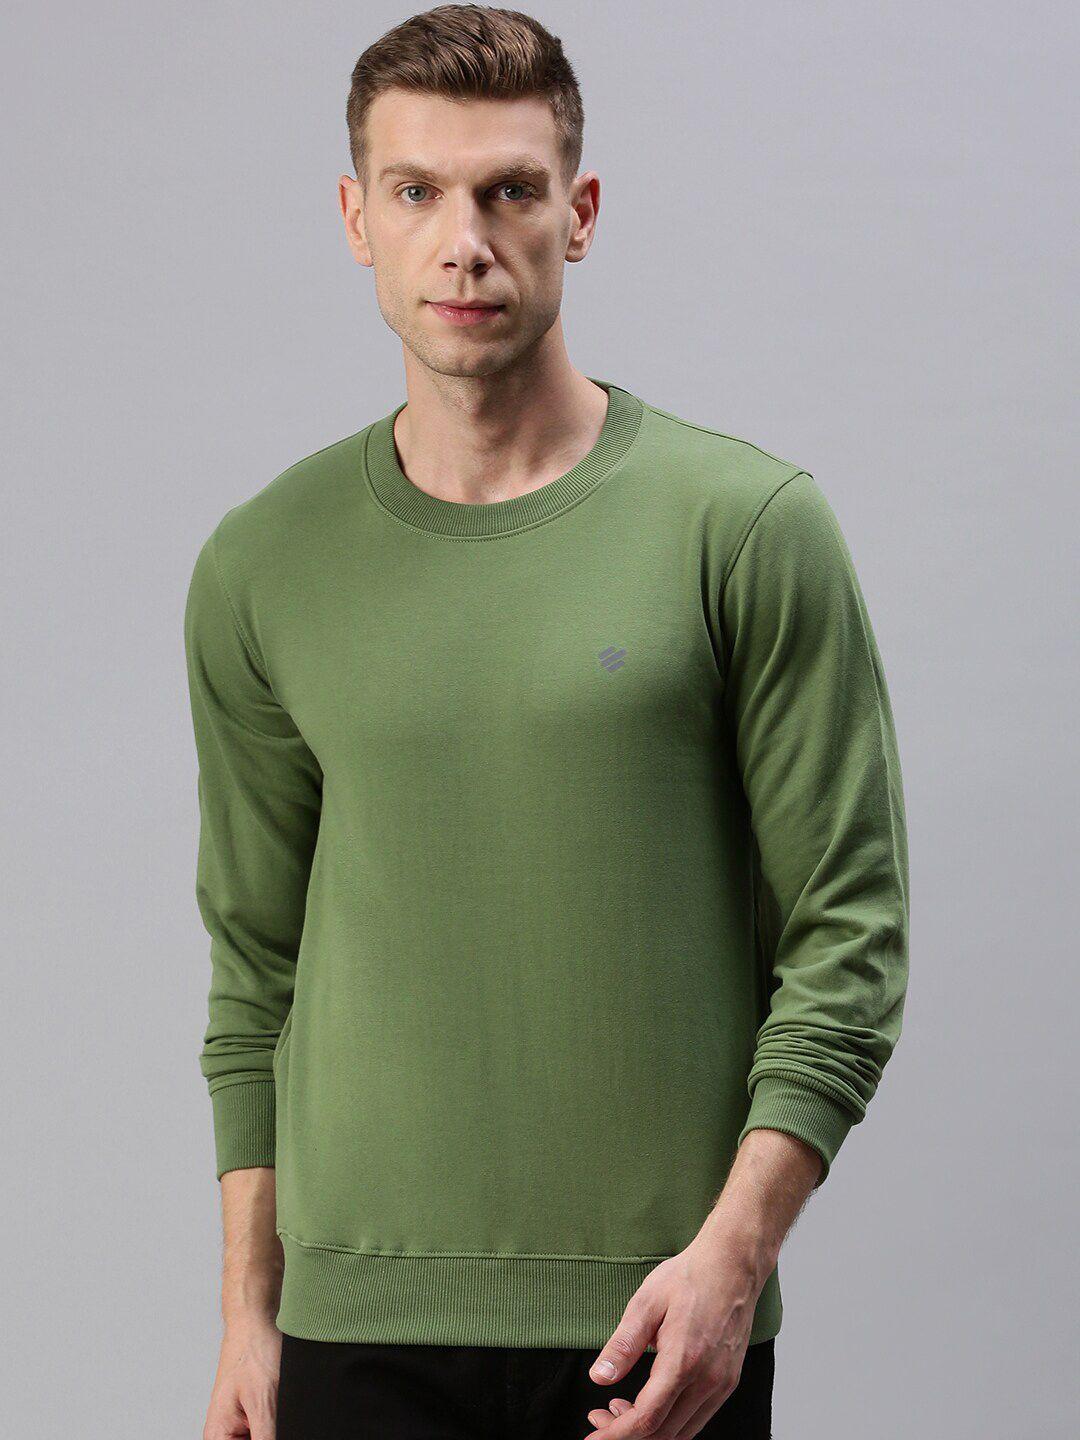 onn-men-olive-green-sweatshirt